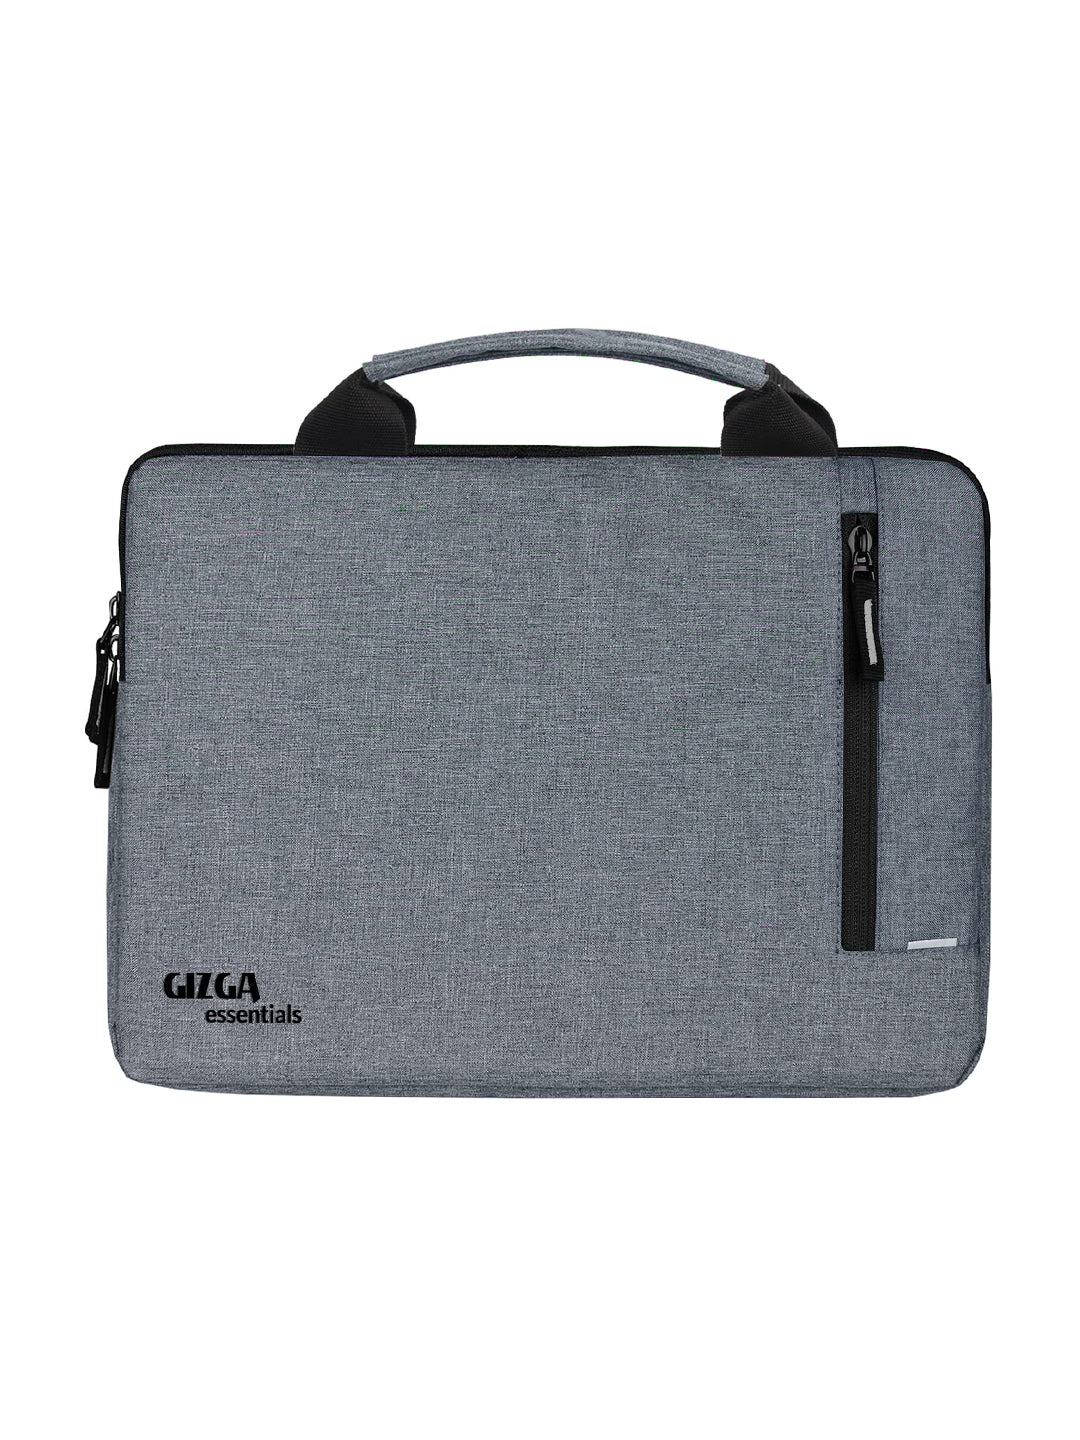 Gizga Essentials Laptop Bag Sleeve Case Cover